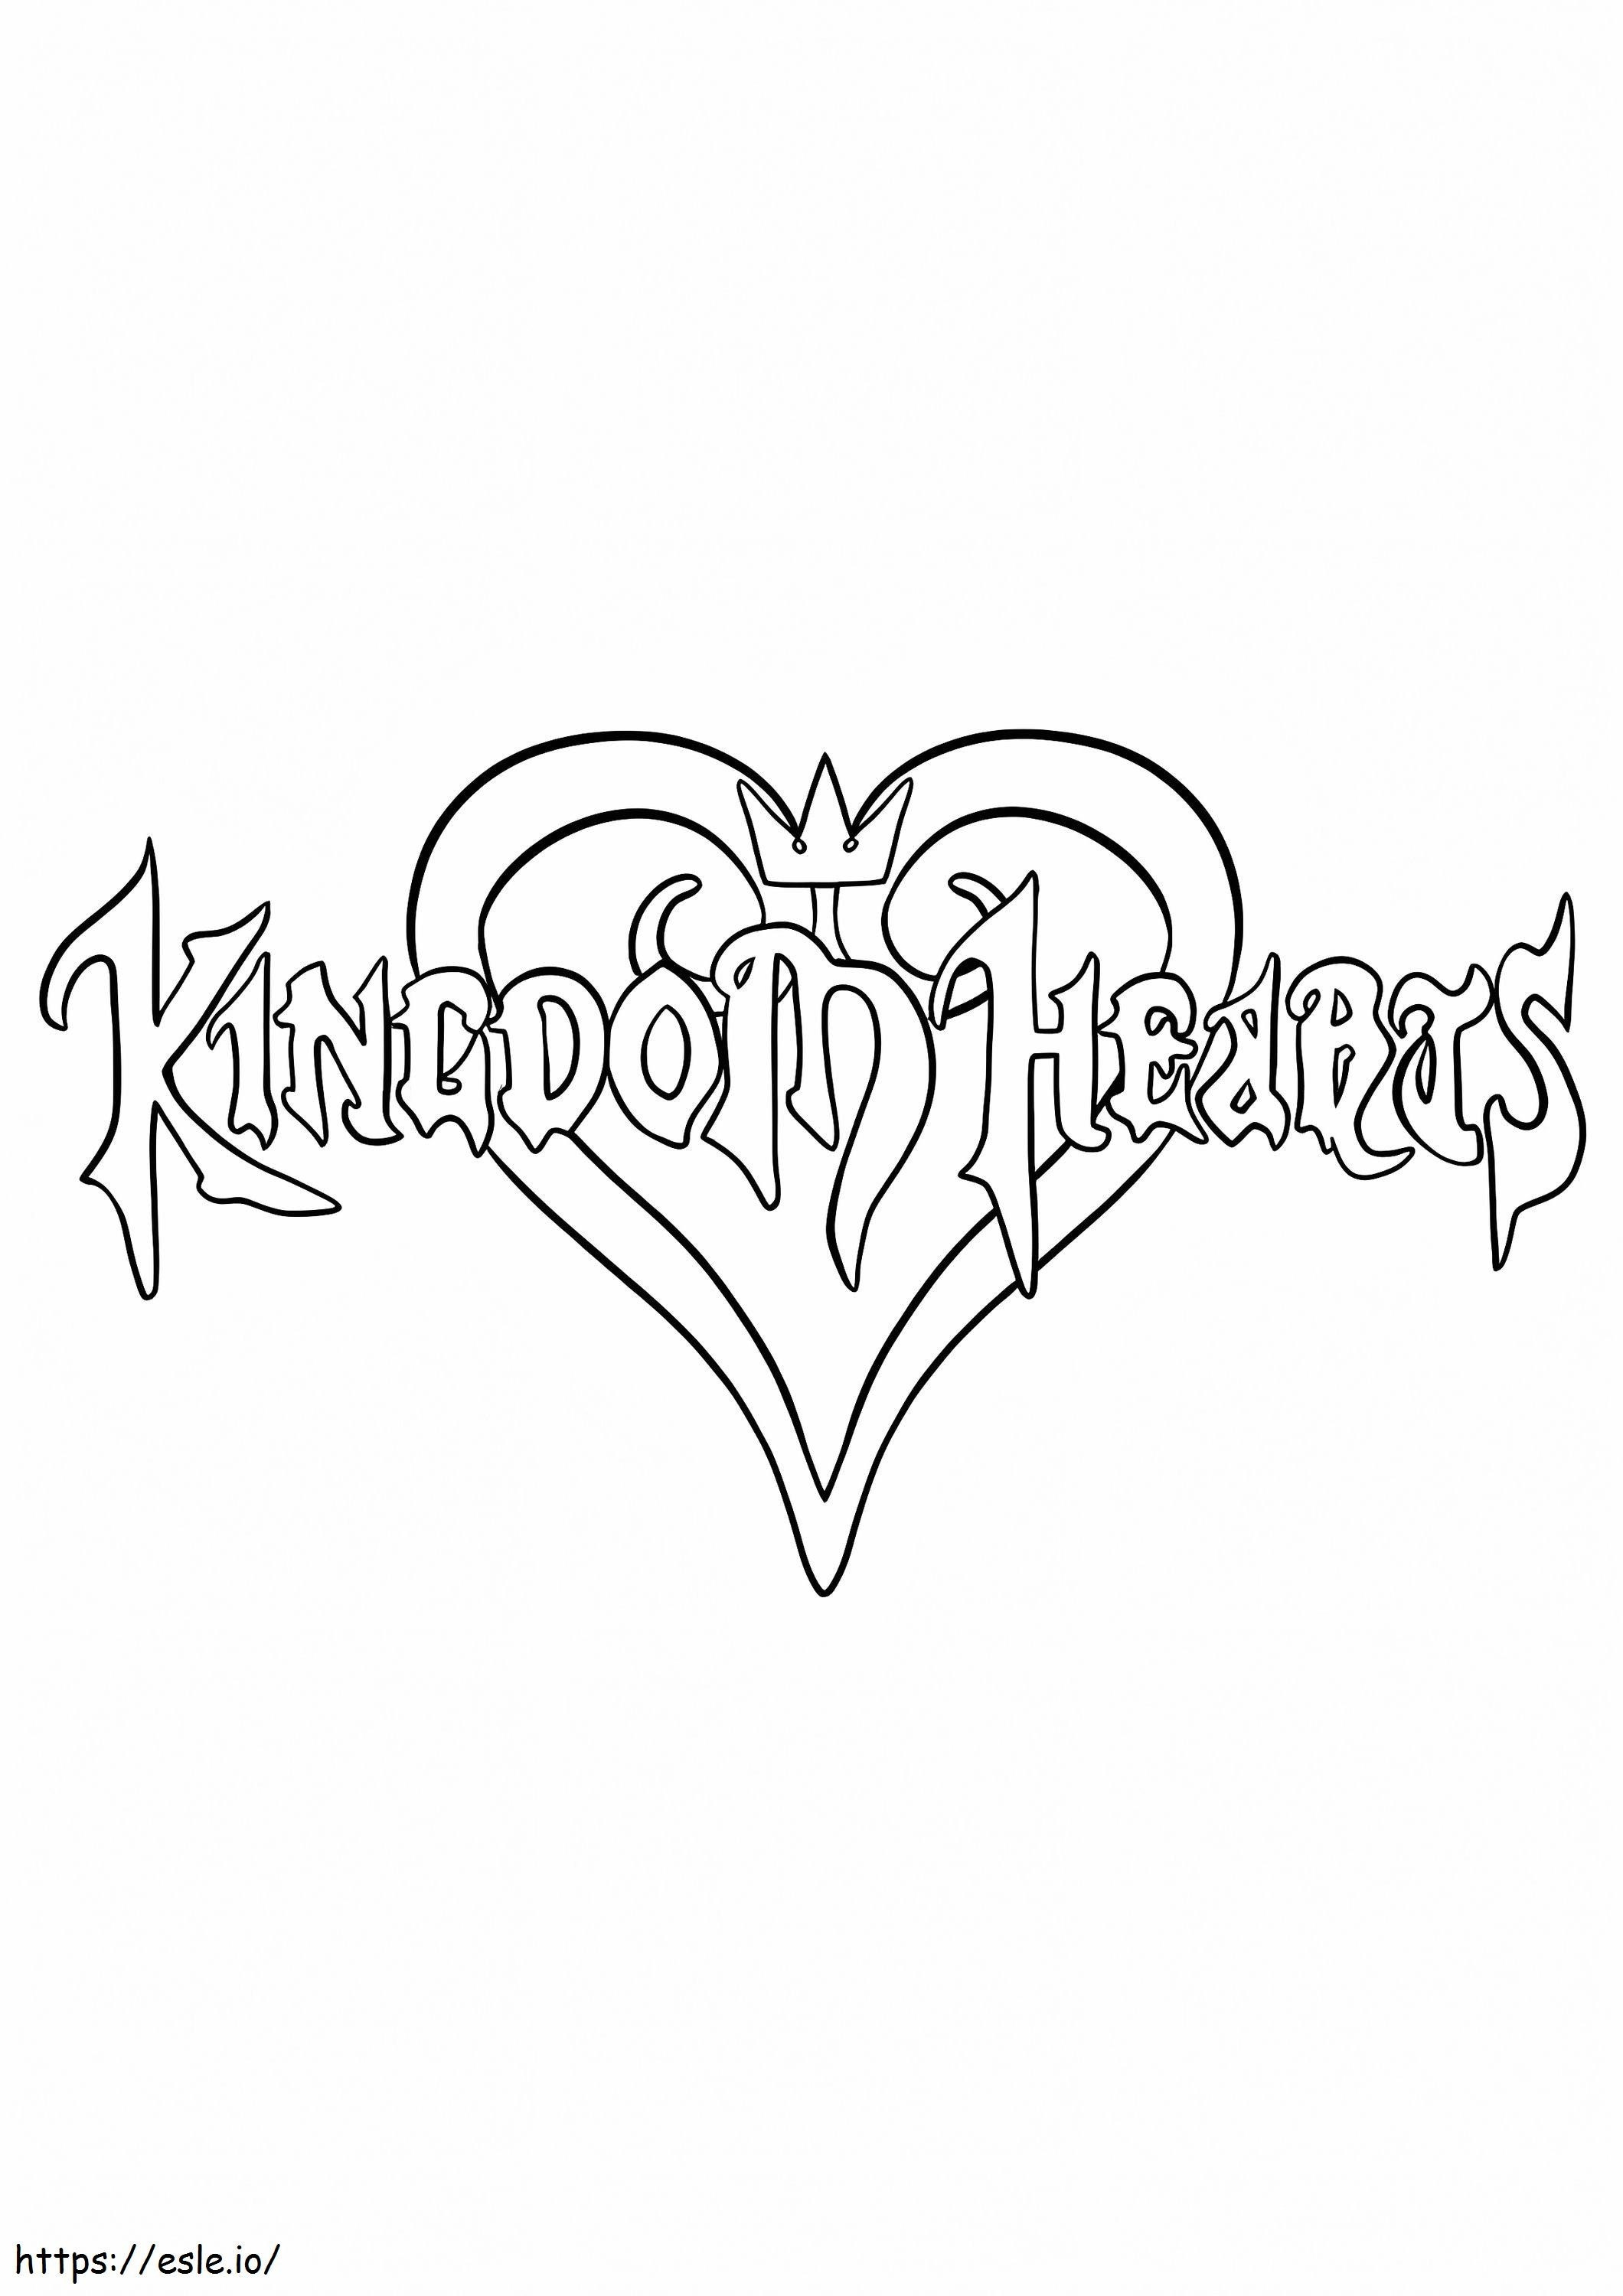 Kingdom Hearts-logo kleurplaat kleurplaat